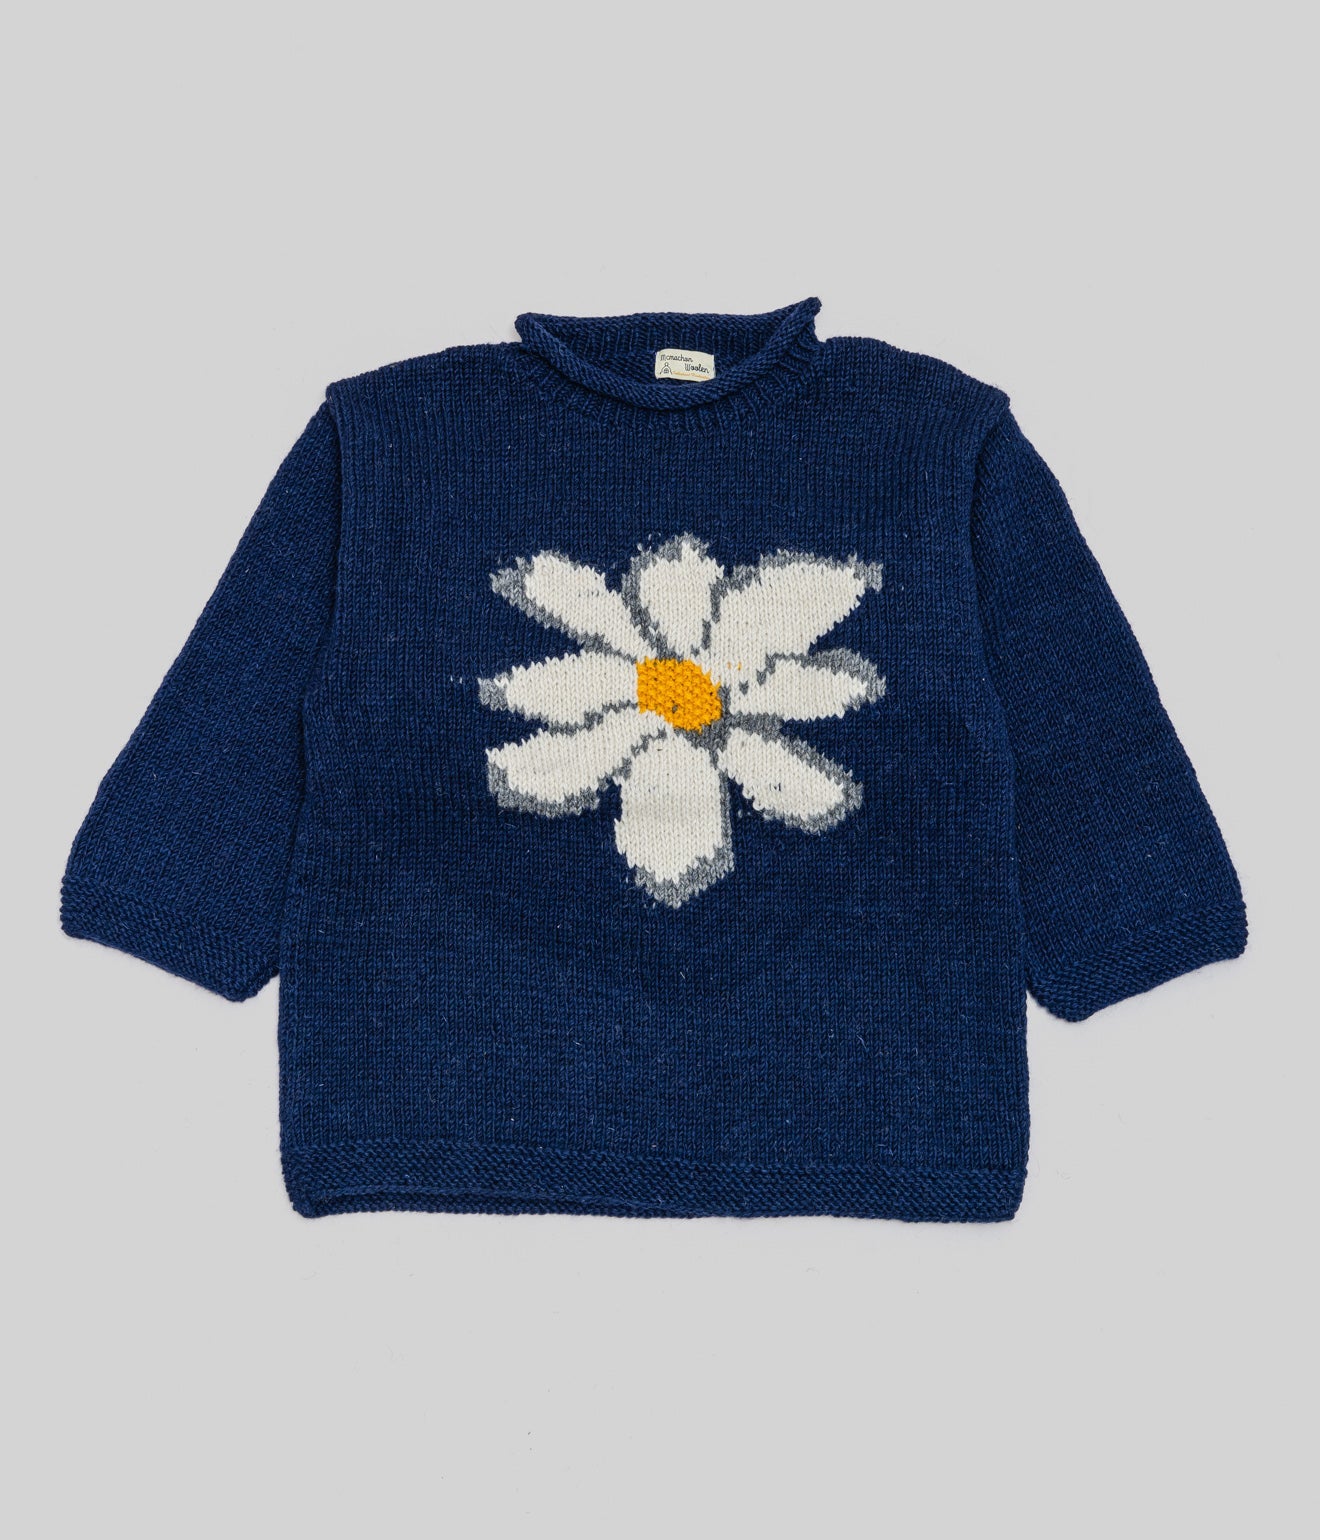 macmahon knitting mills flower 花柄 knit - トップス